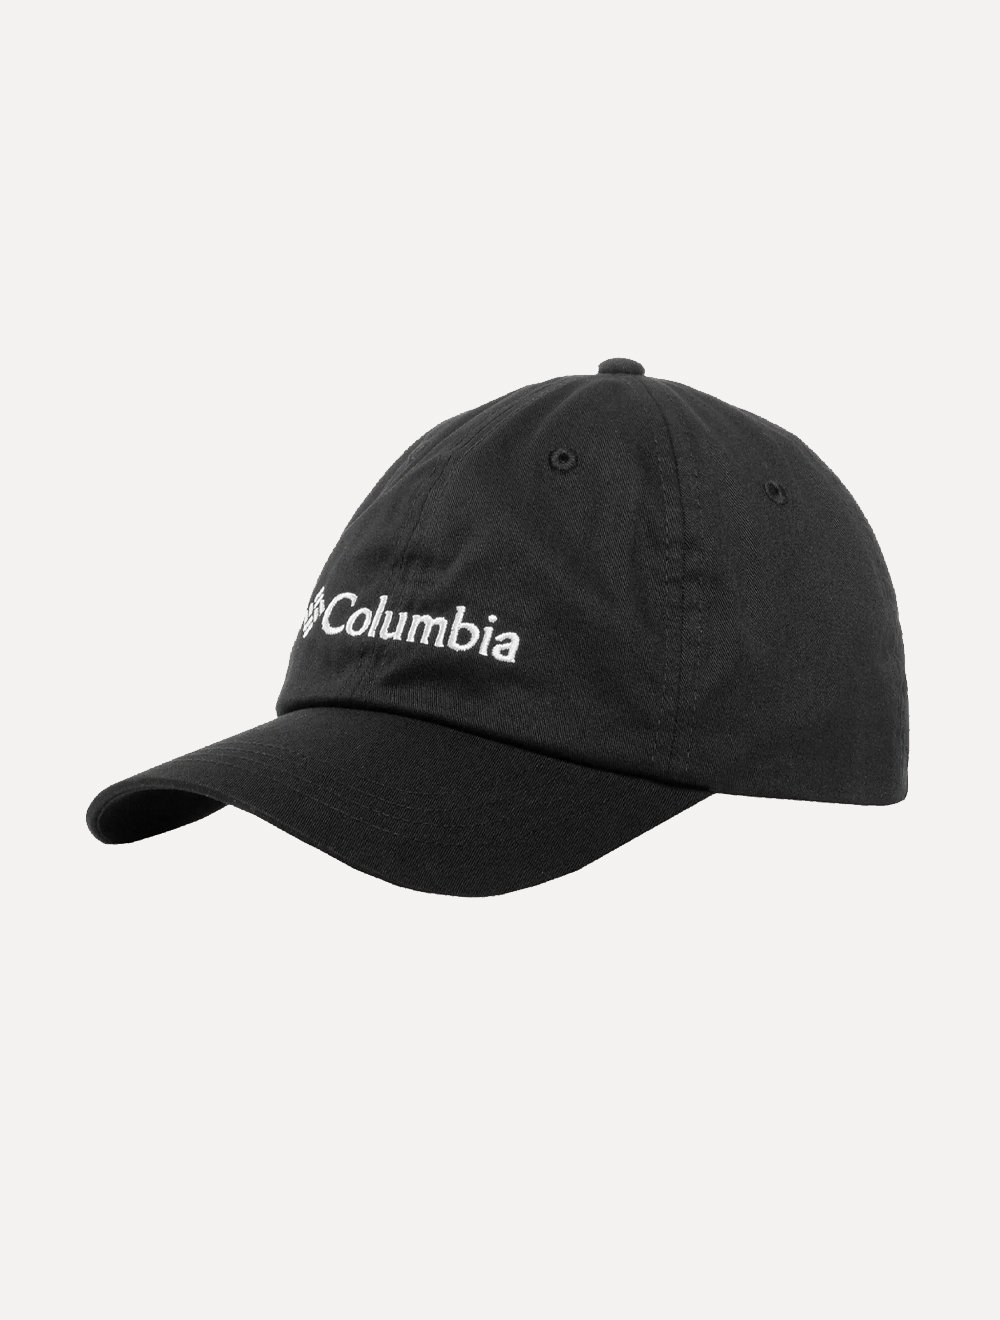 Boné Columbia ROC II Hat Ball Preto